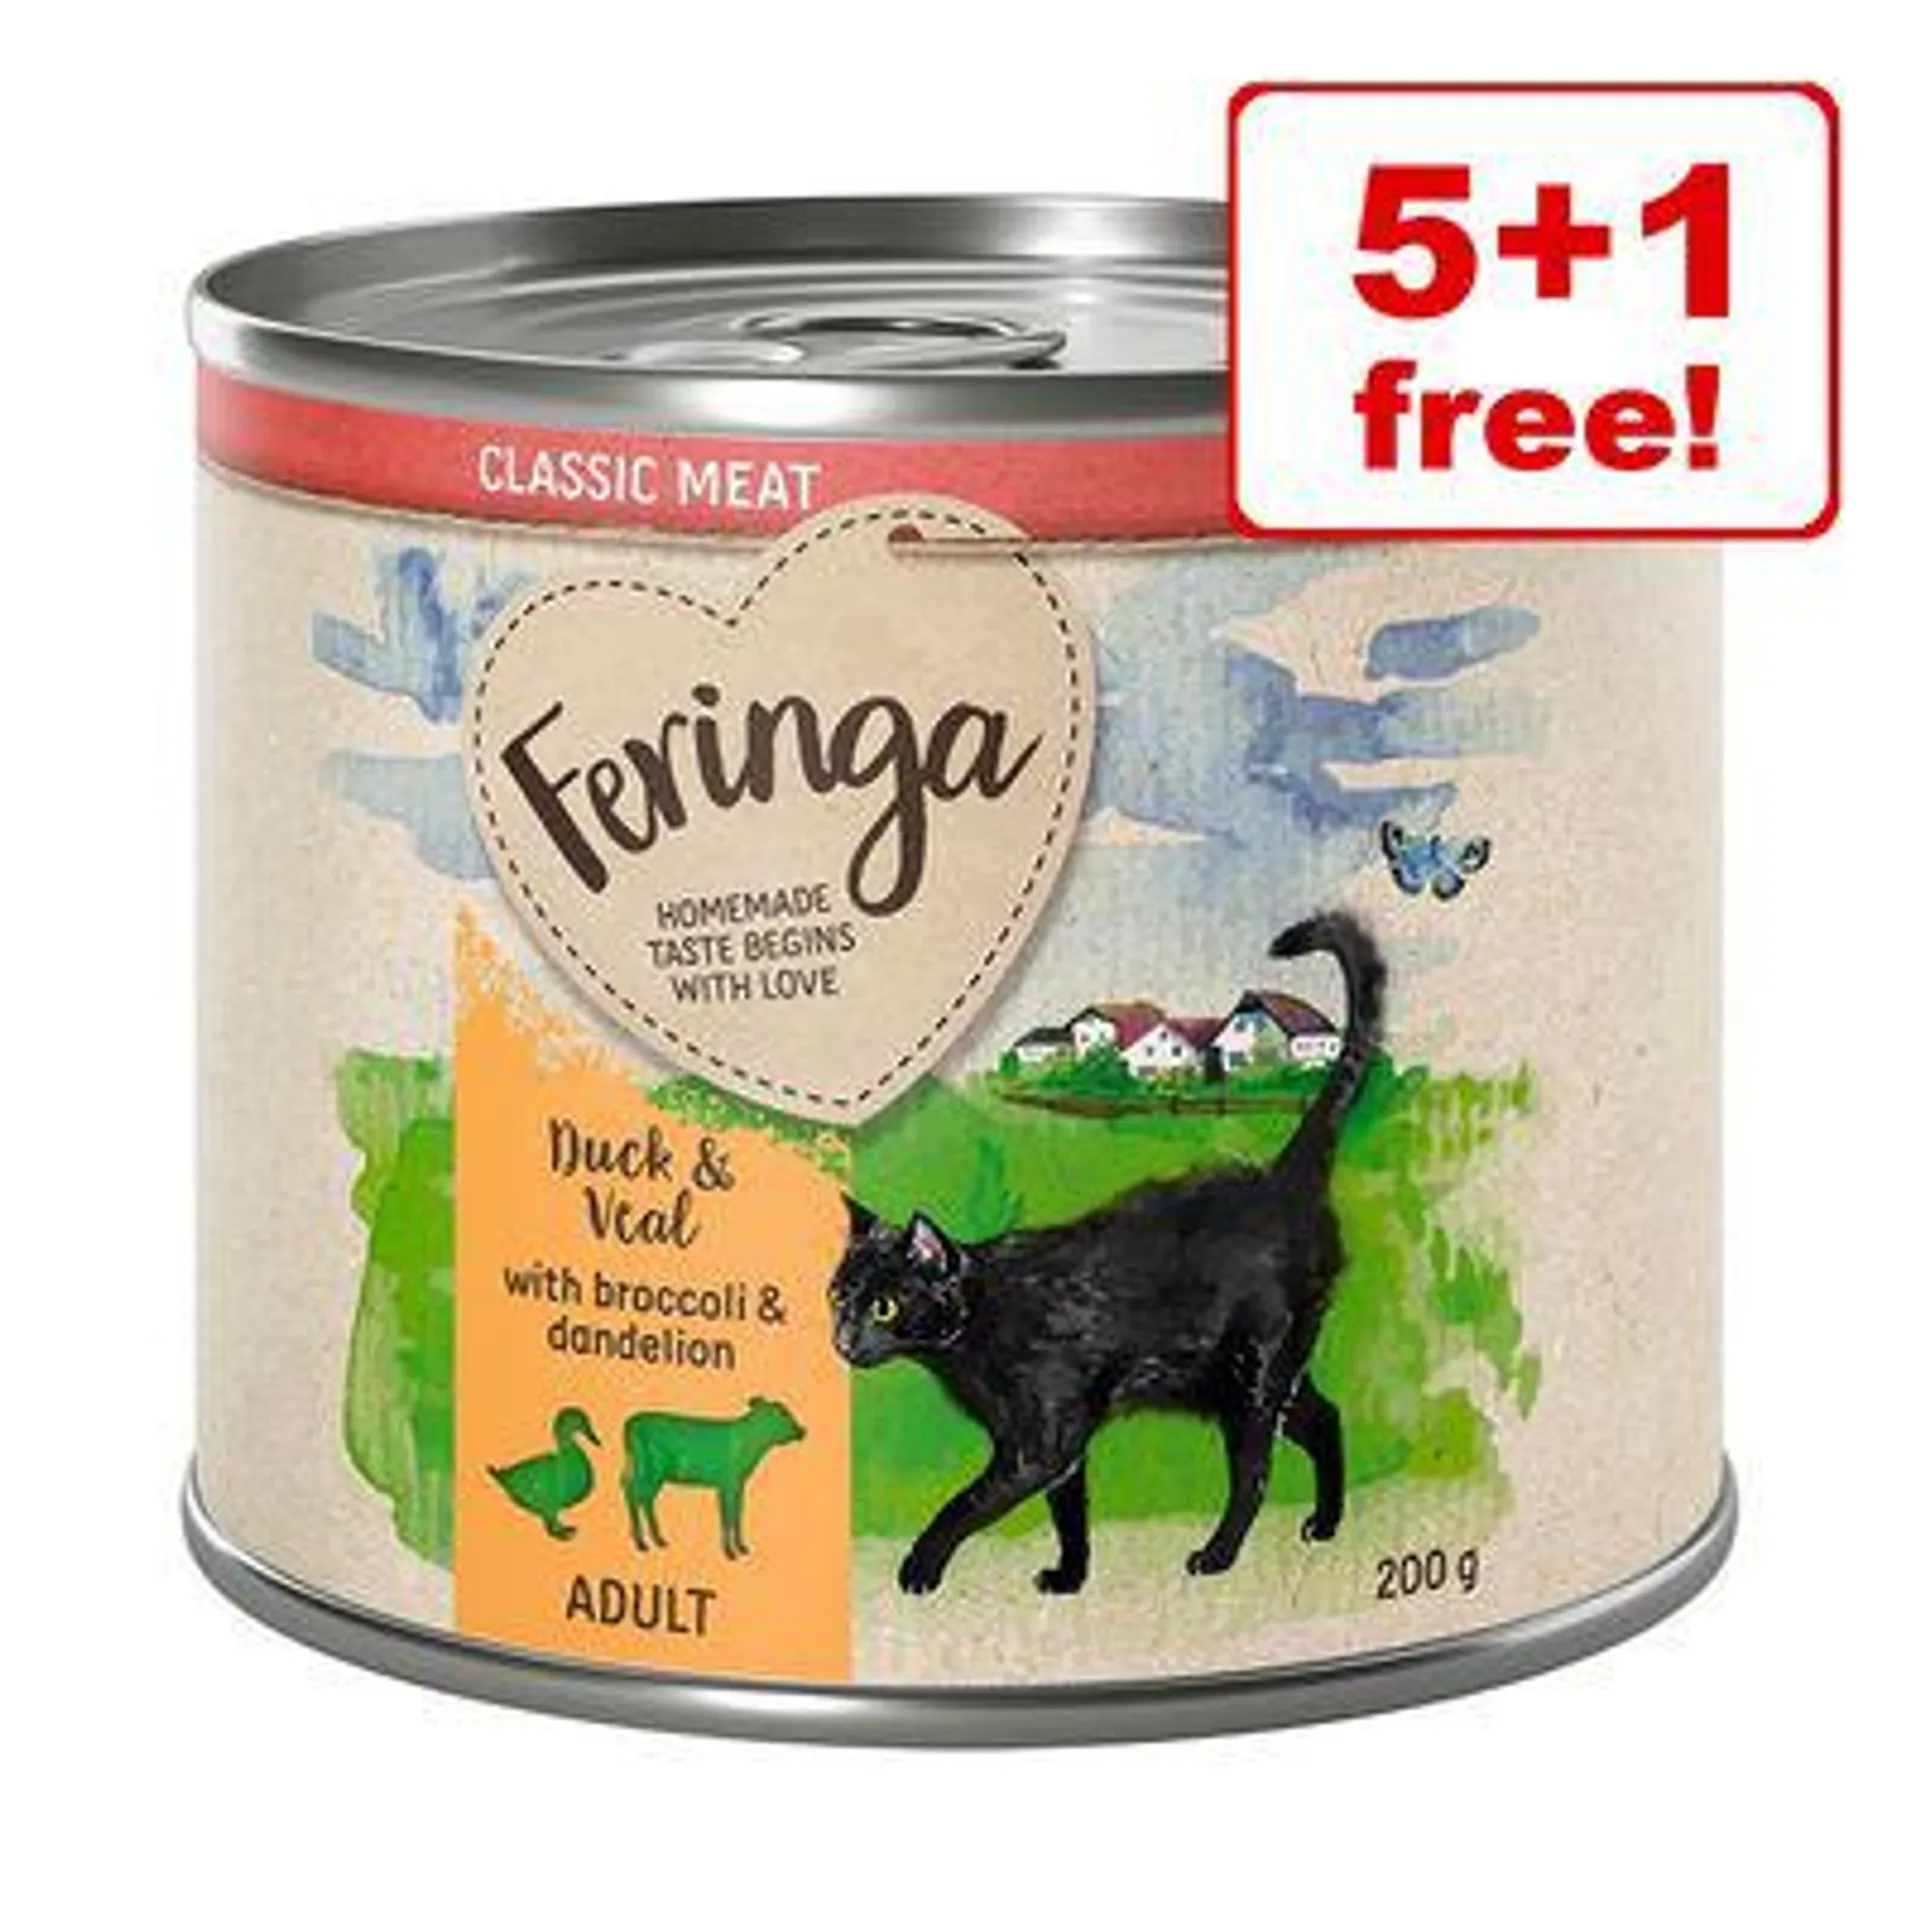 6 x 200g Feringa Classic Meat Menu Wet Cat Food - 5 + 1 Free!*